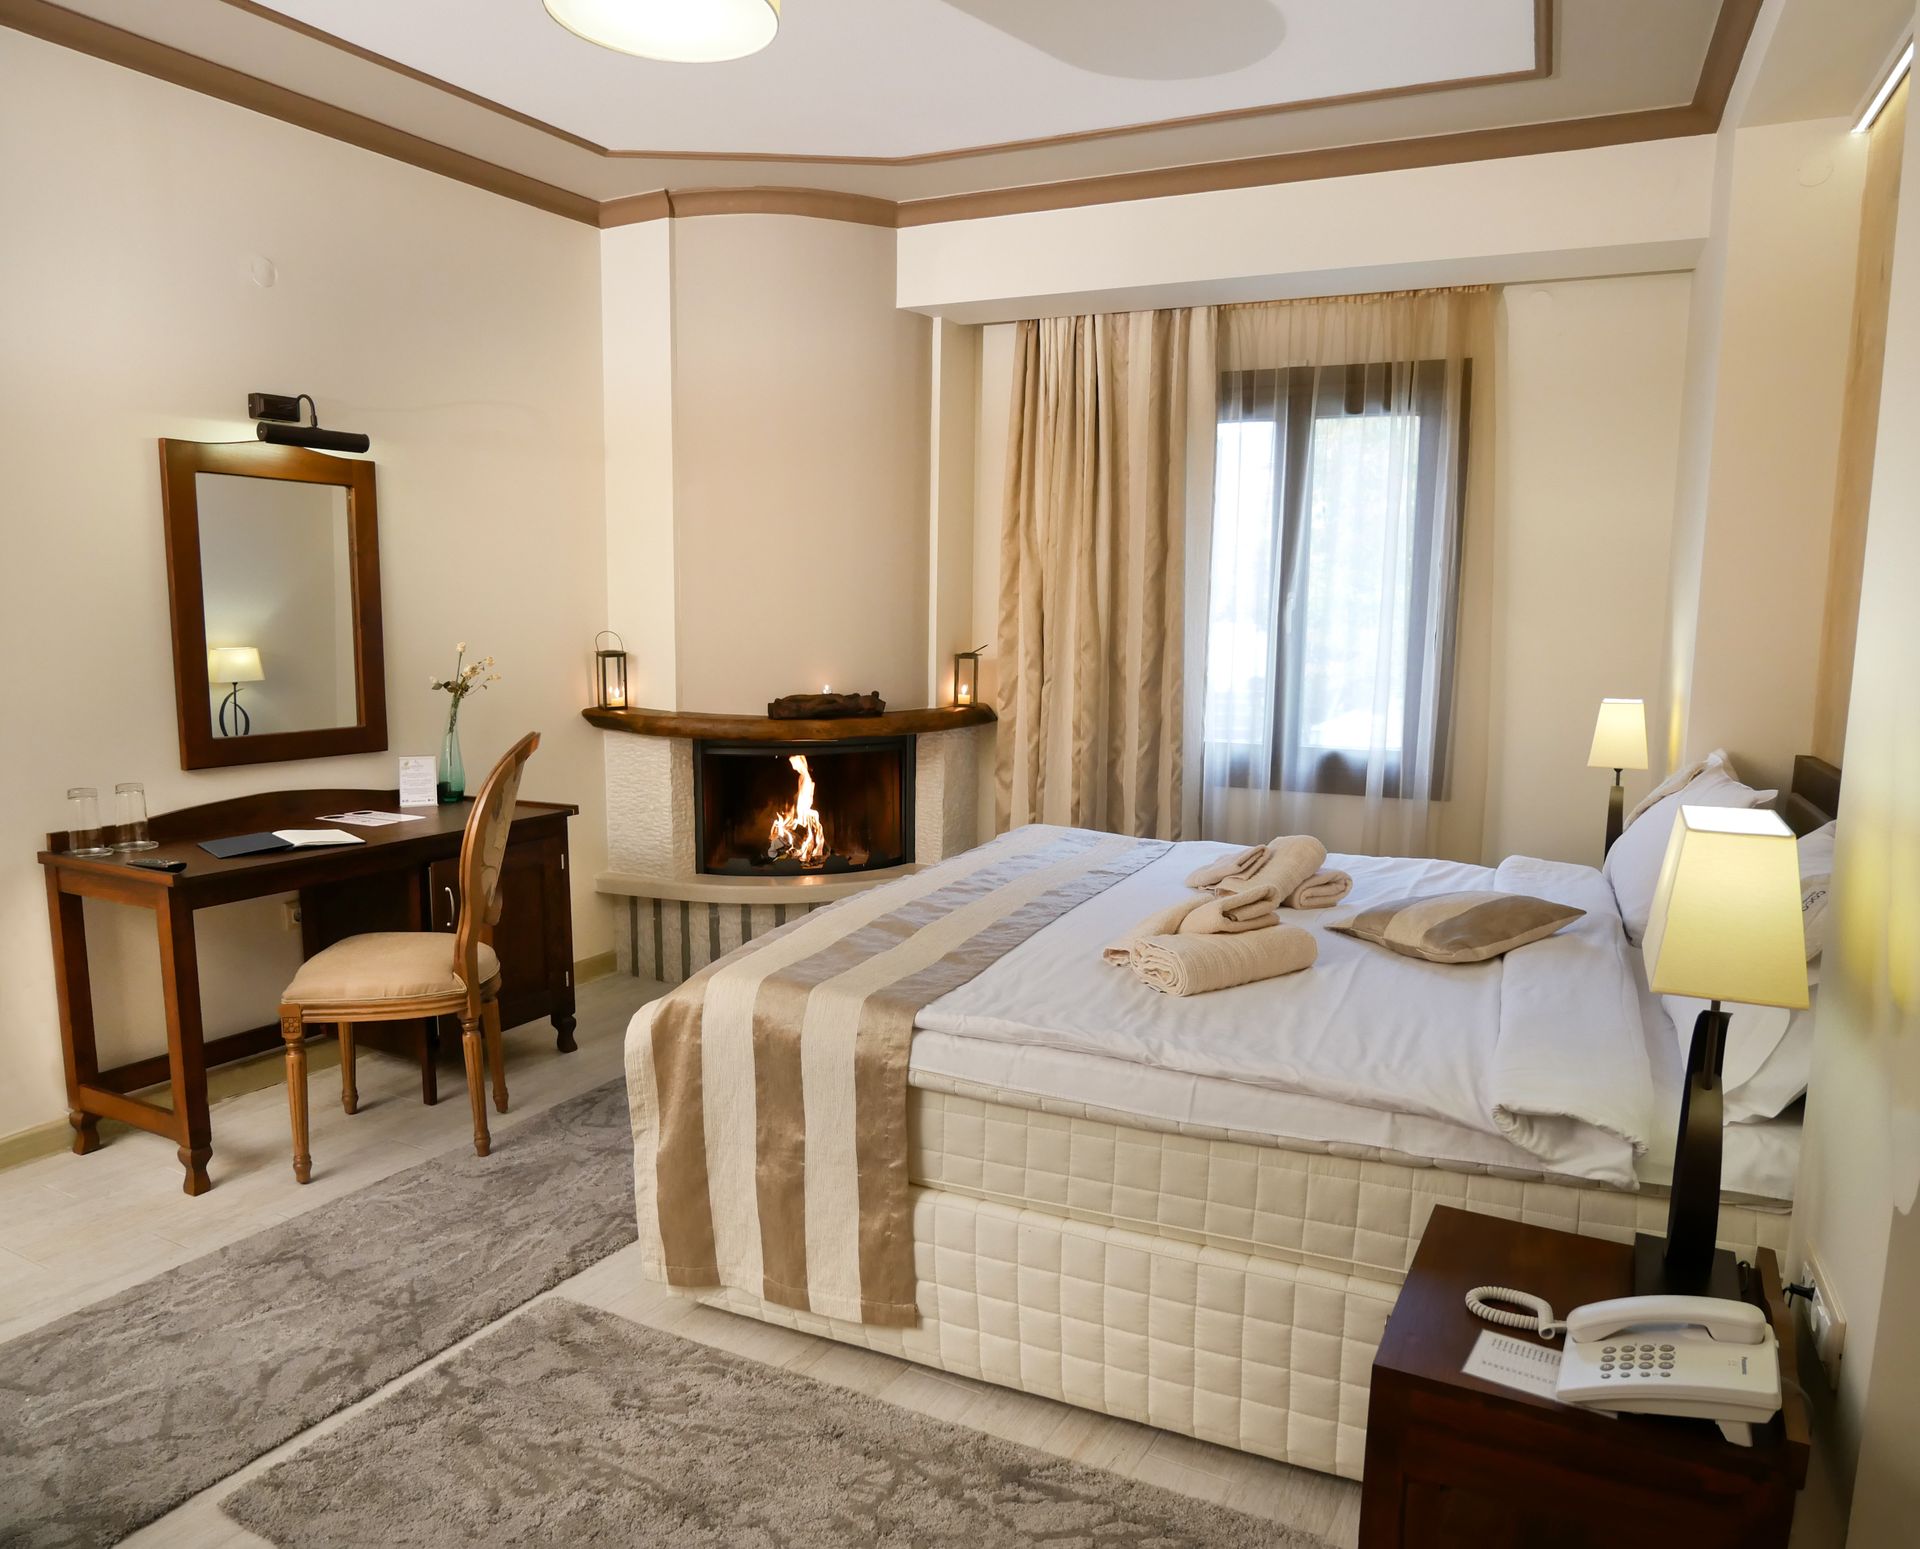 Rodovoli Hotel Konitsa - Κόνιτσα ✦ -14% ✦ 2 Ημέρες (1 Διανυκτέρευση) ✦ 2 άτομα + 1 παιδί έως 2 ετών ✦ 2 ✦ έως 30/09/2022 ✦ Early check in και Late check out κατόπιν διαθεσιμότητας!